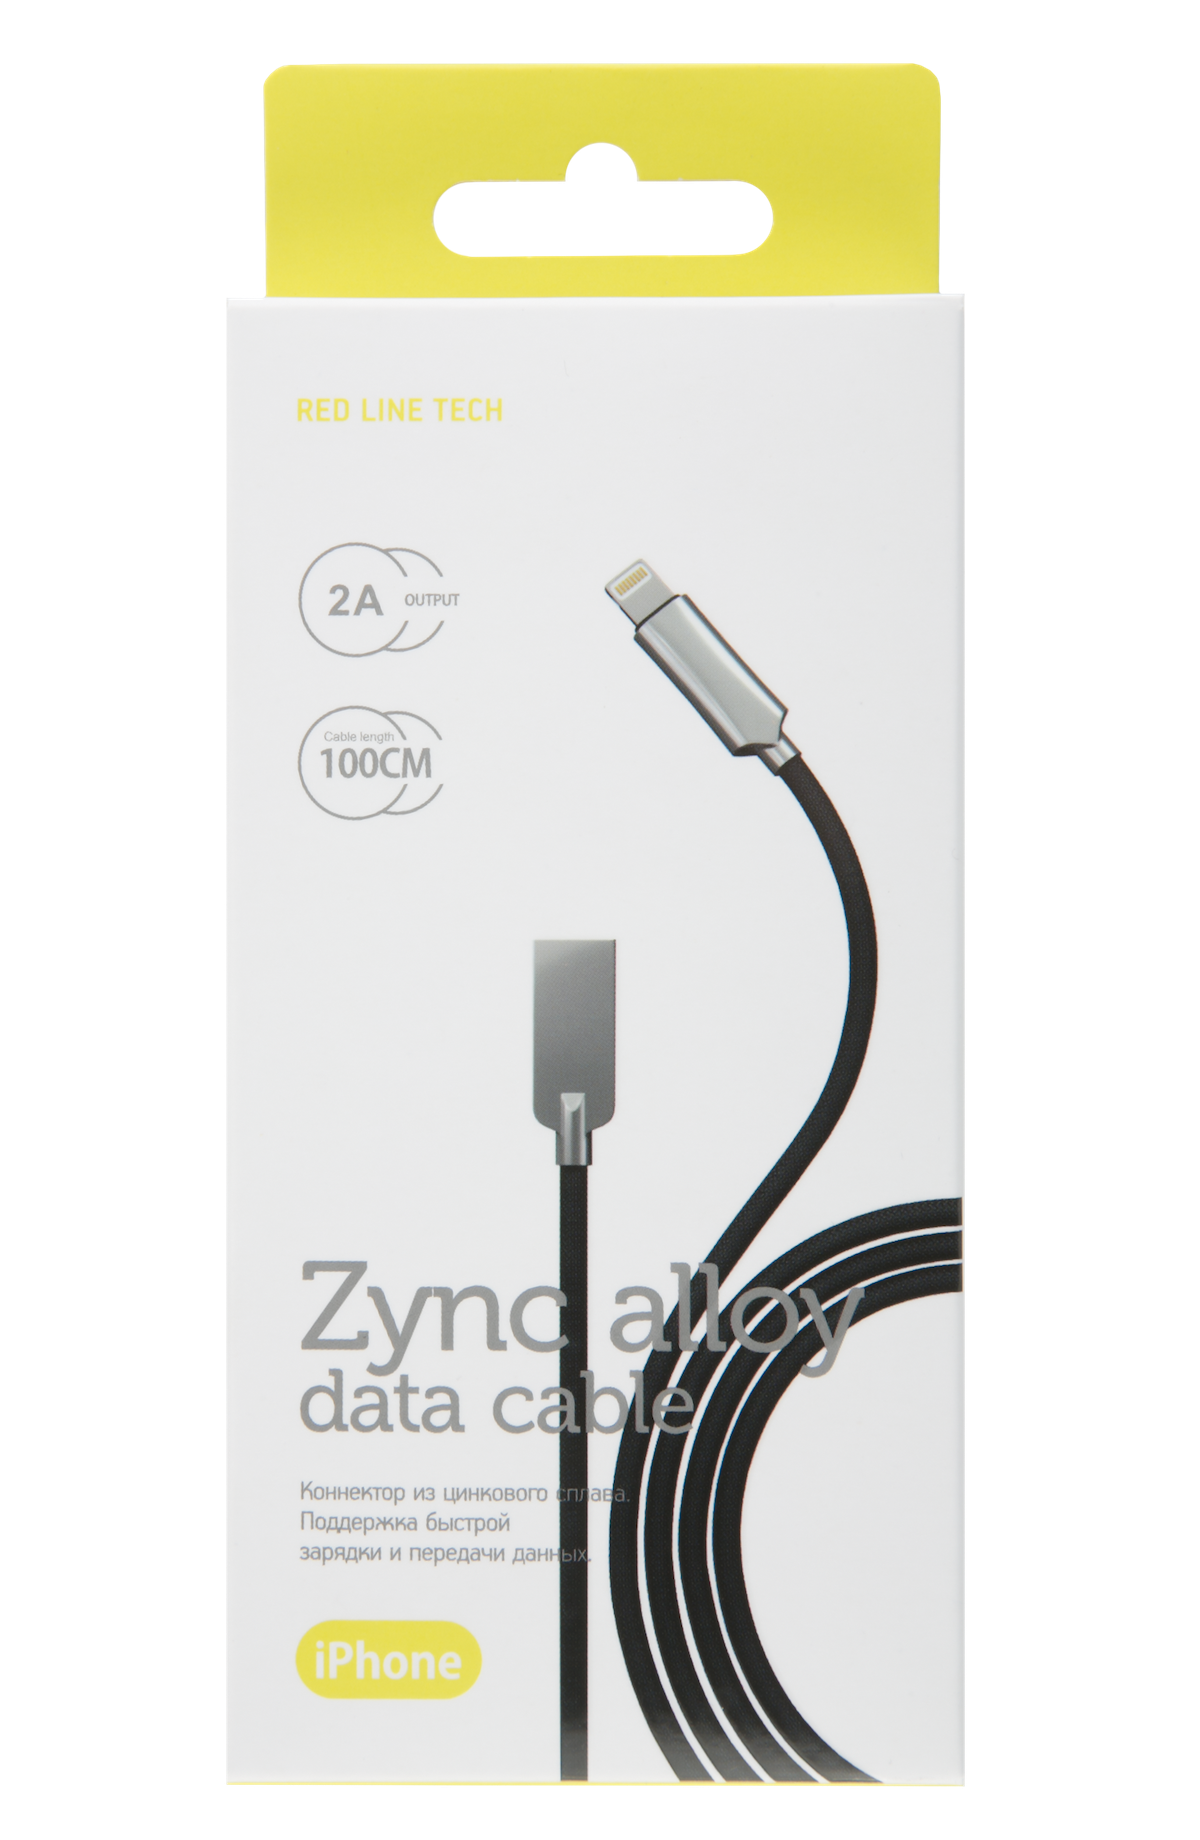 Дата-Кабель Red Line LX13 Zync alloy USB - Lightning